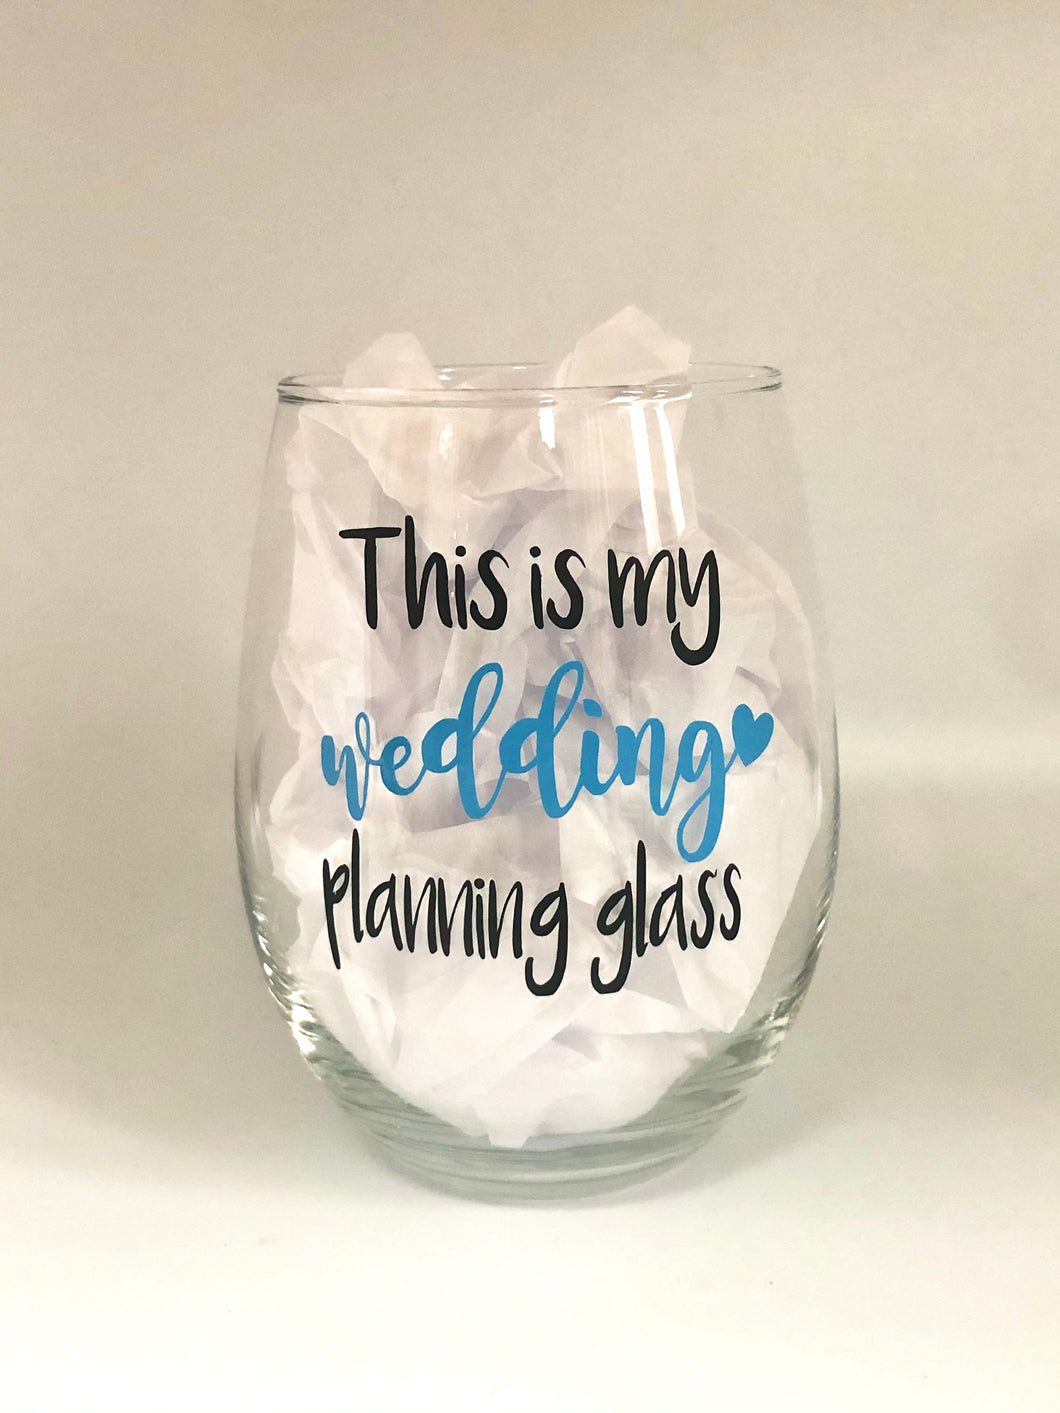 Wedding Planning Stemless Wine Glass